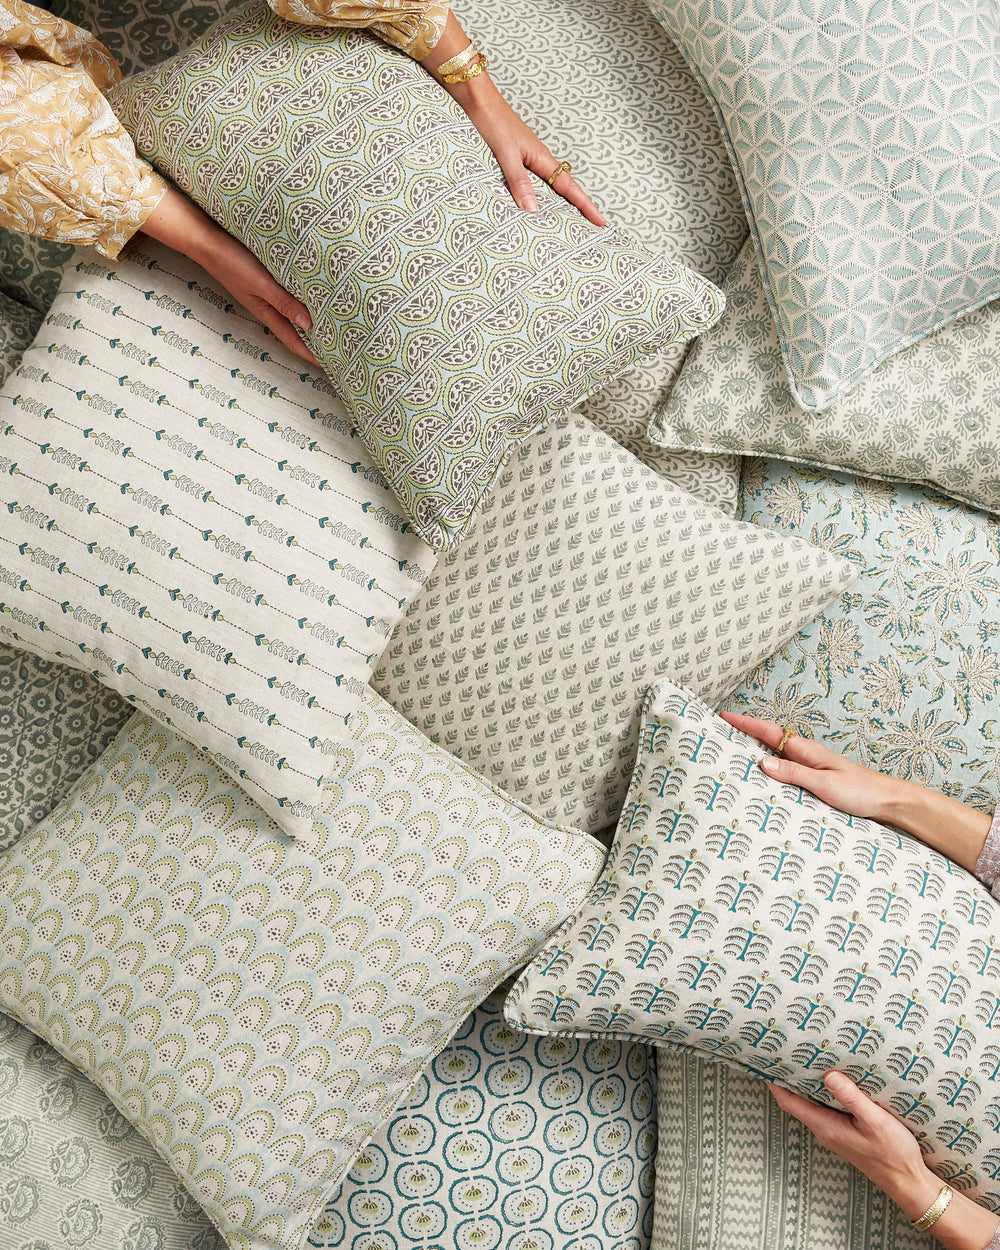 Collioure Celadon linen cushion